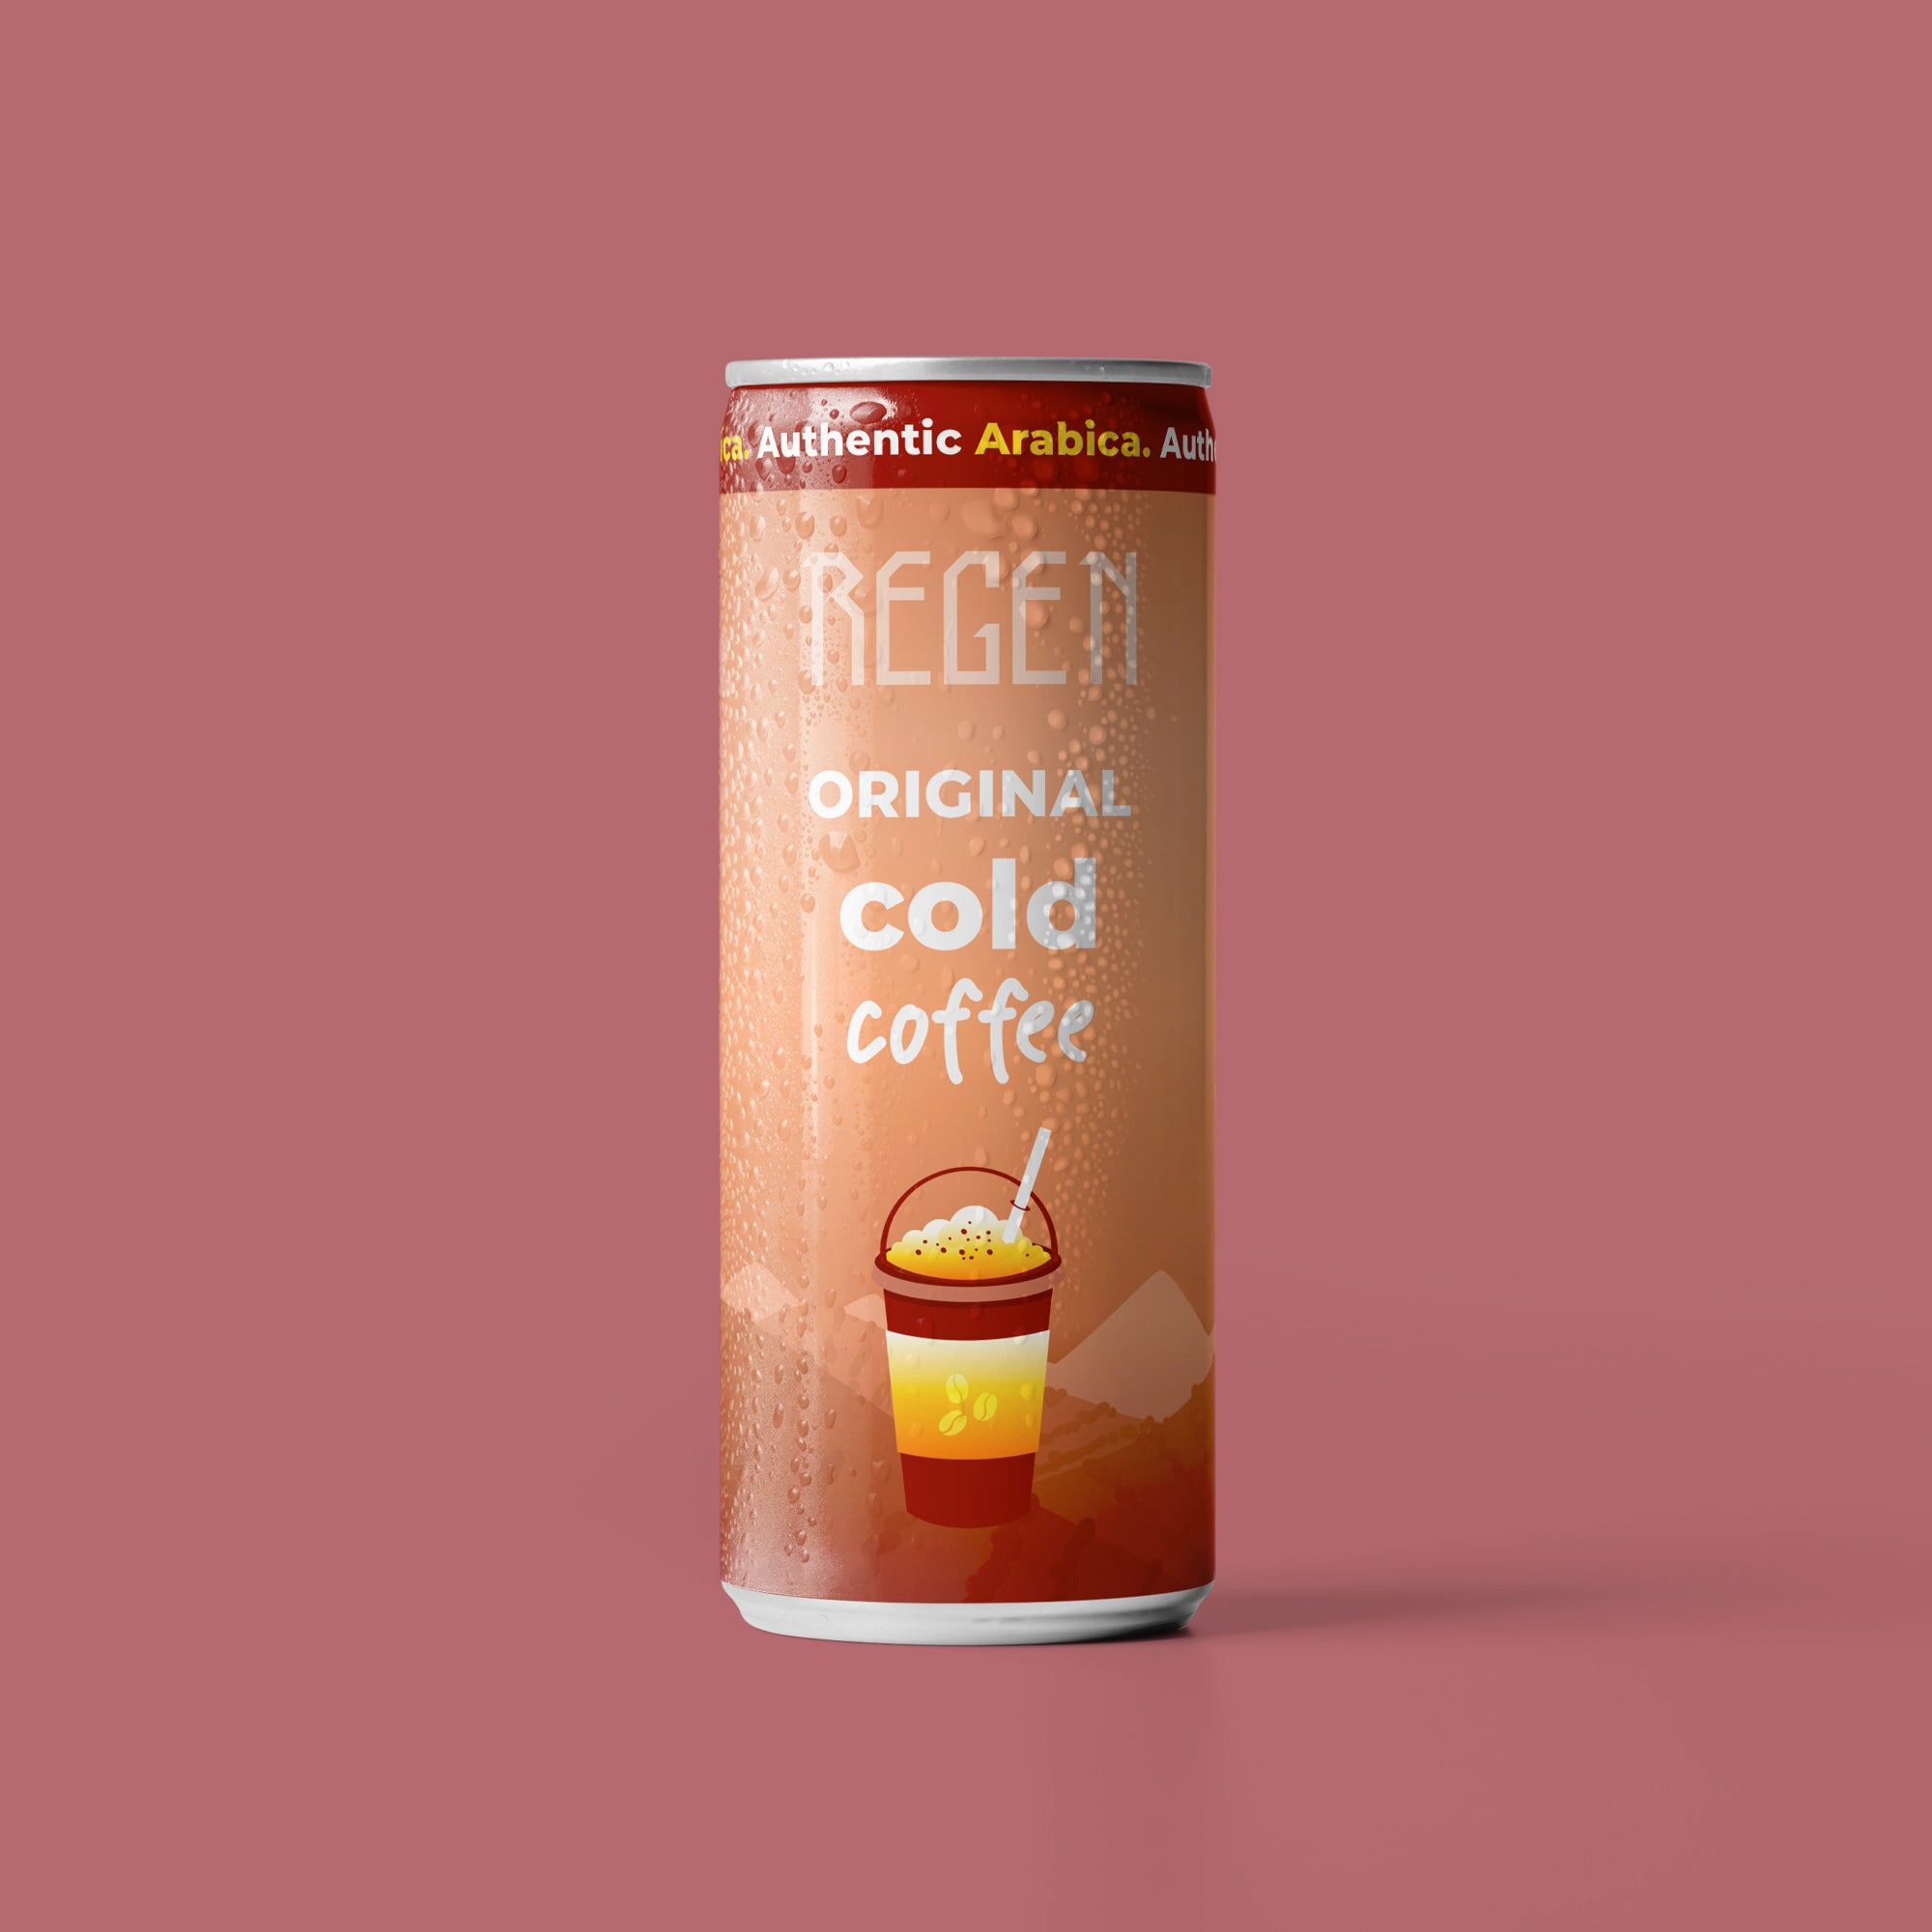 Original Cold Coffee | 250 ml Can